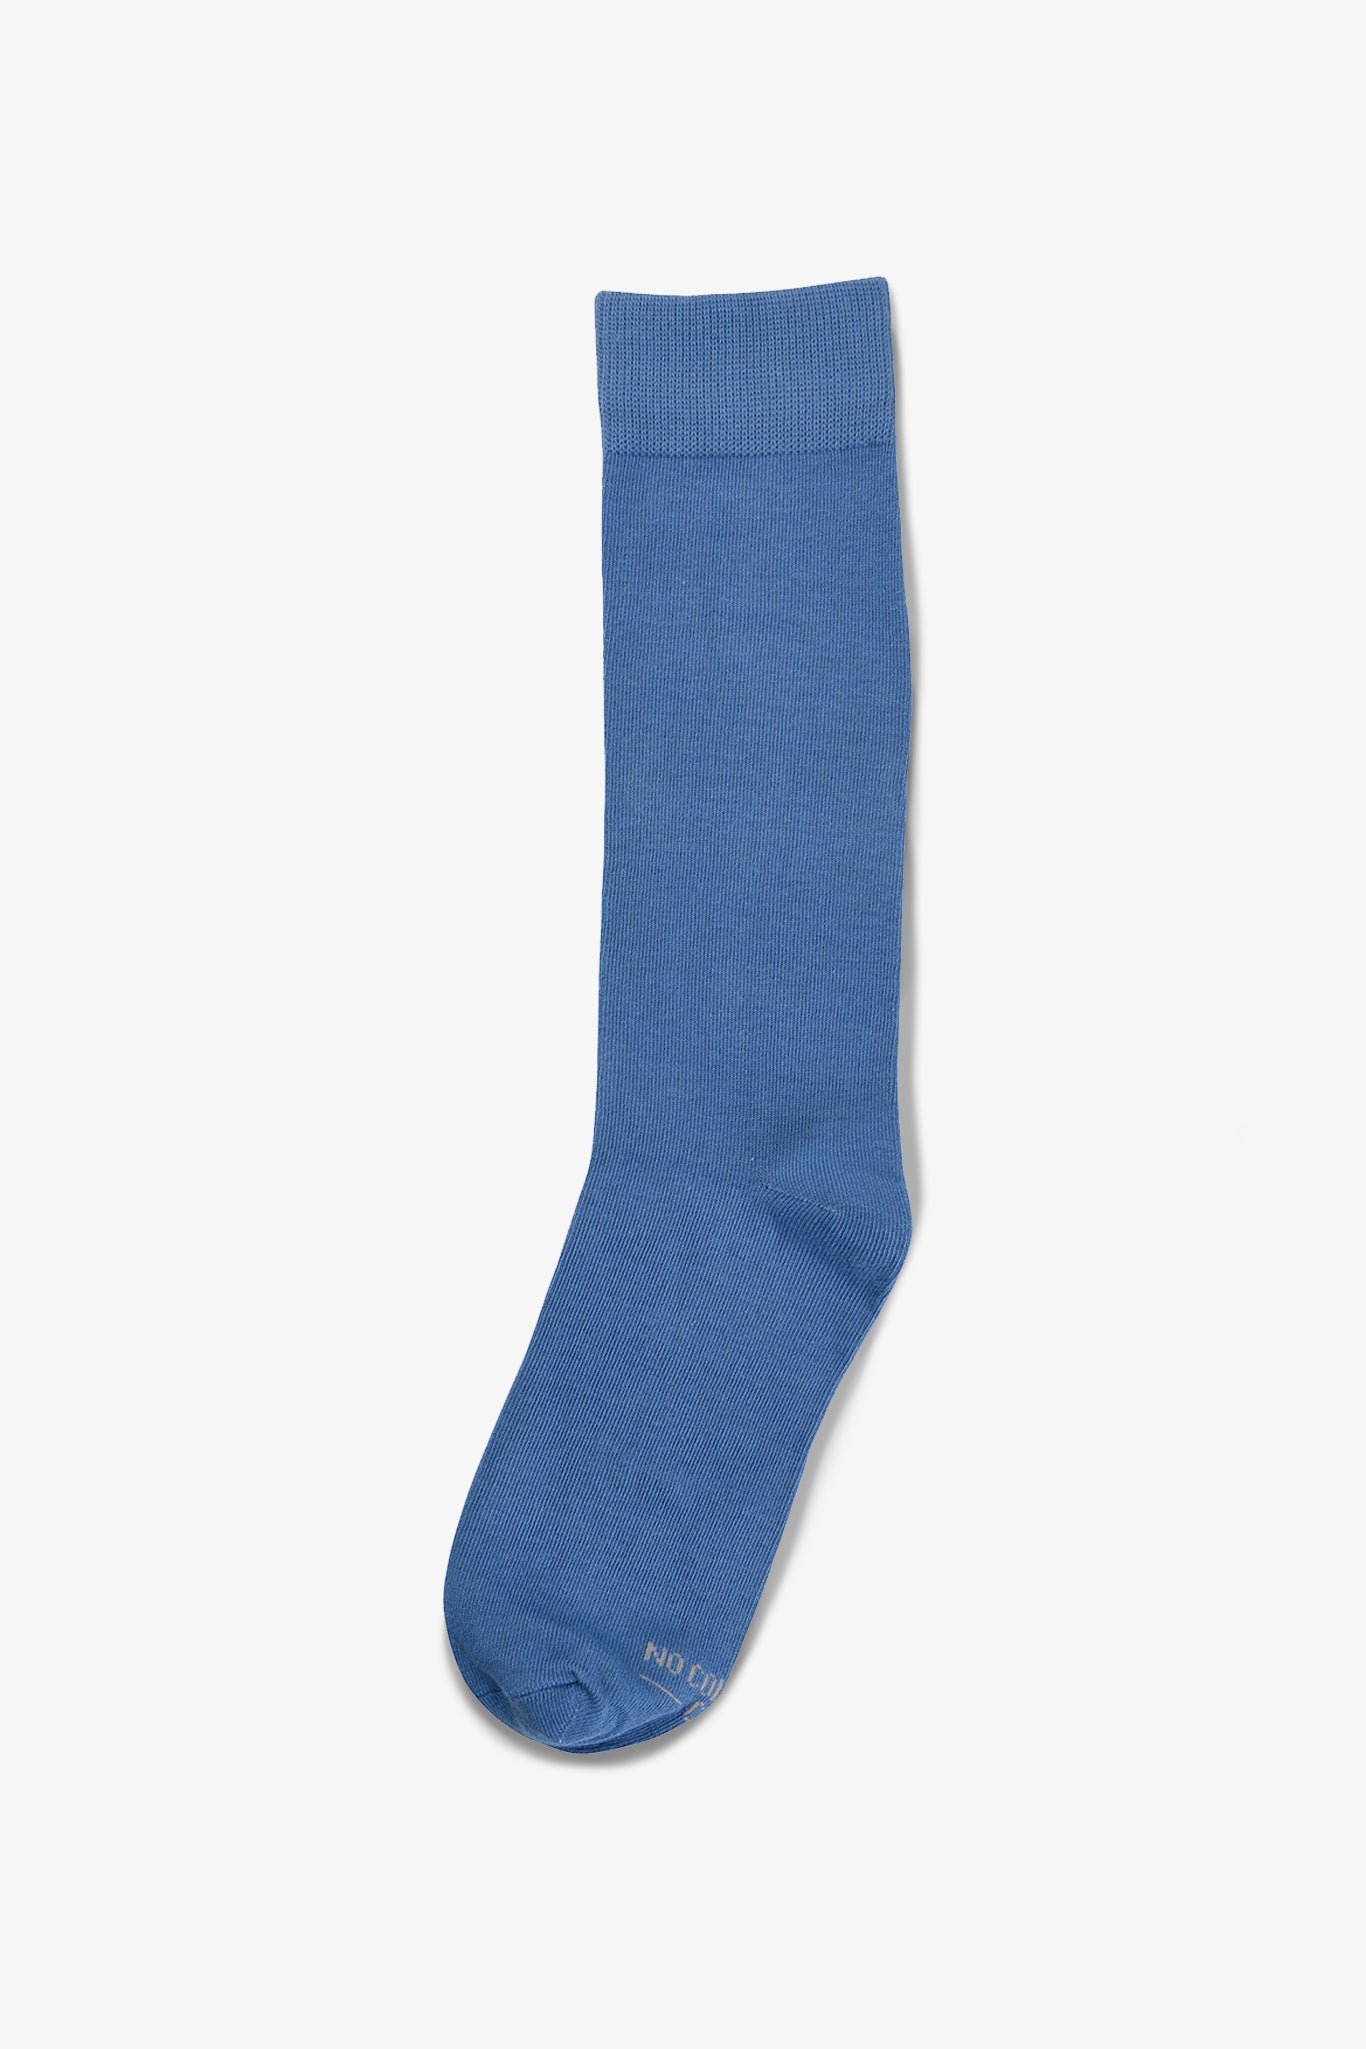 Solid Steel Blue Groomsmen Socks by No Cold Feet